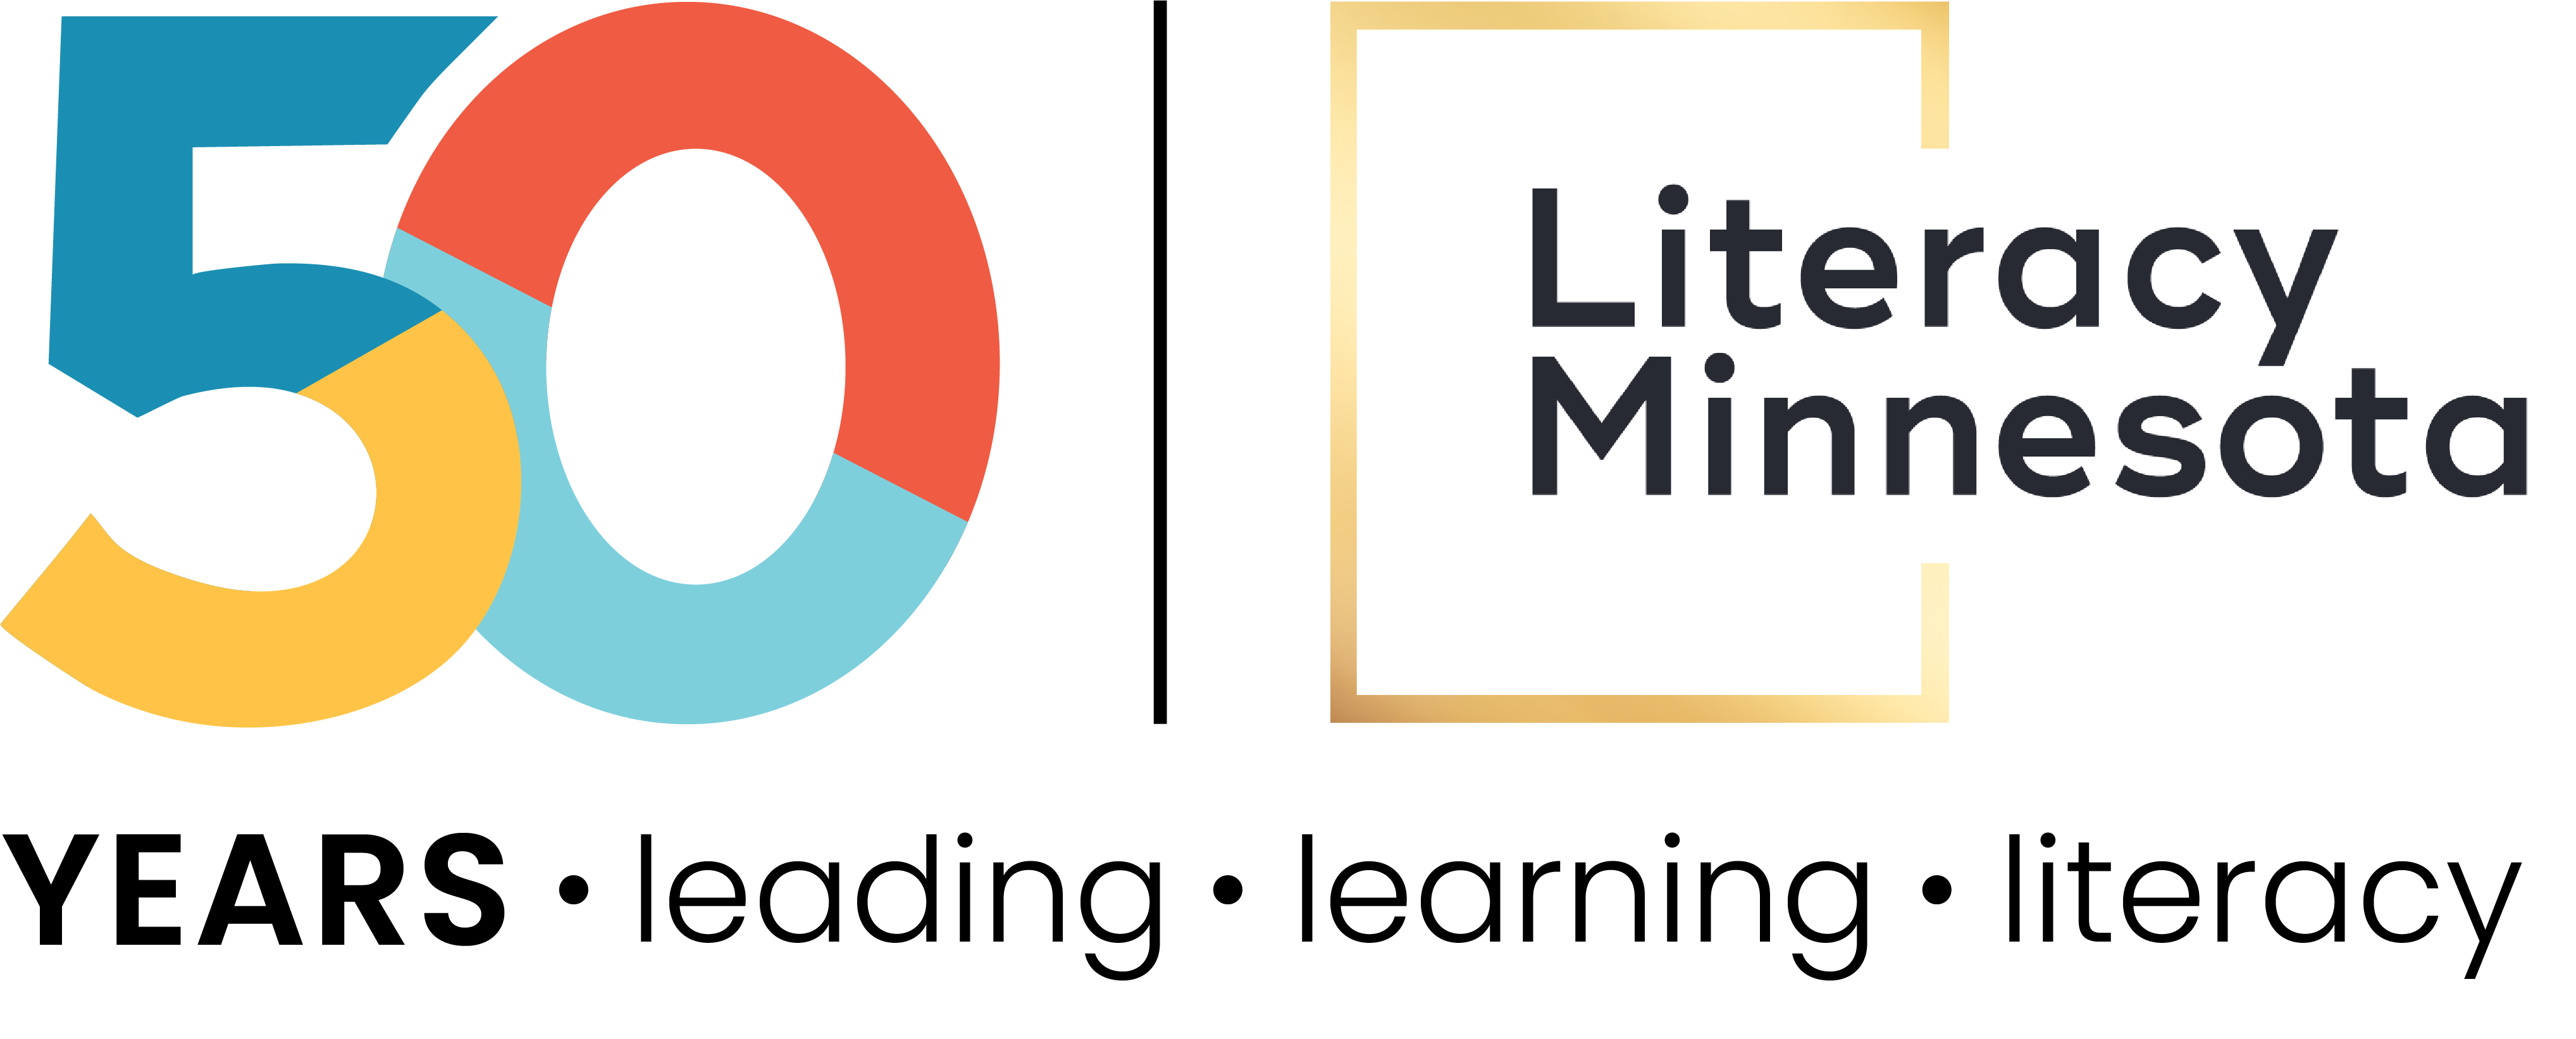 Literacy Minnesota 50th Logo